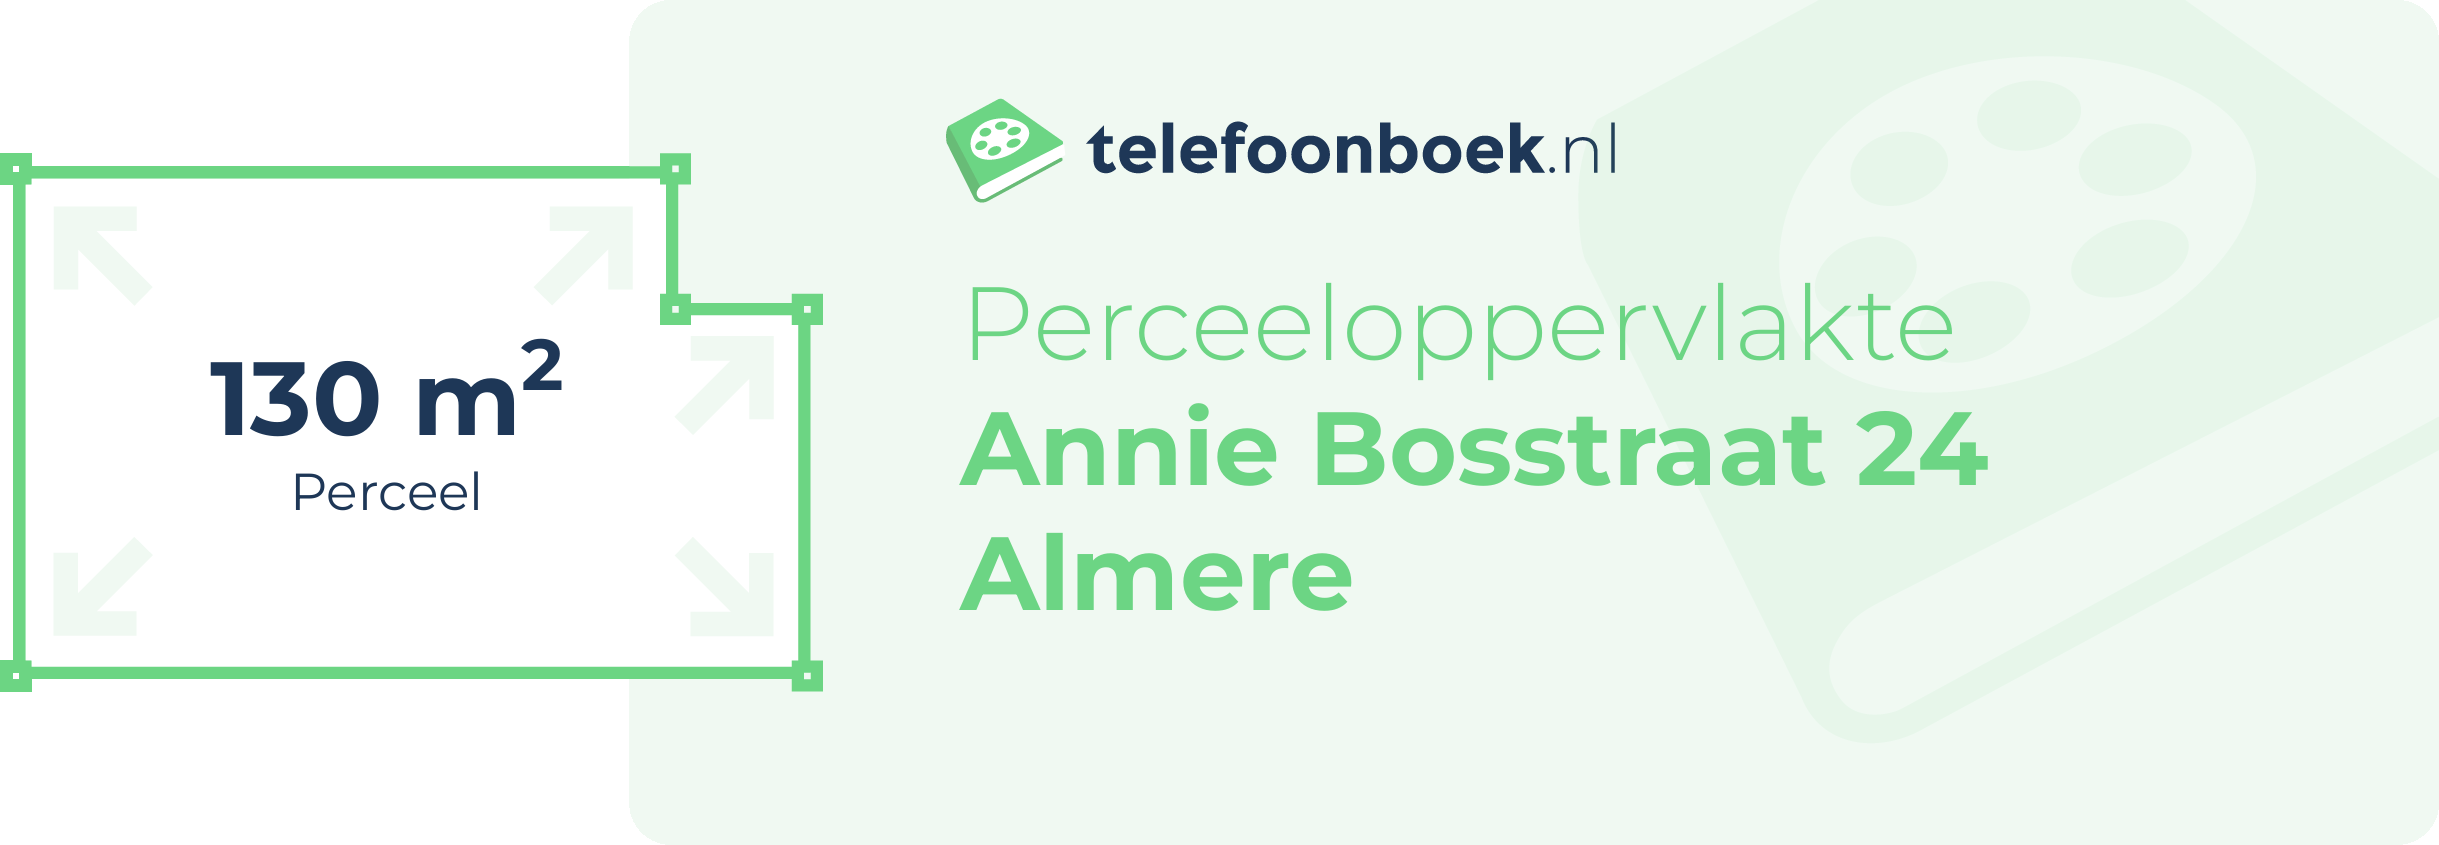 Perceeloppervlakte Annie Bosstraat 24 Almere